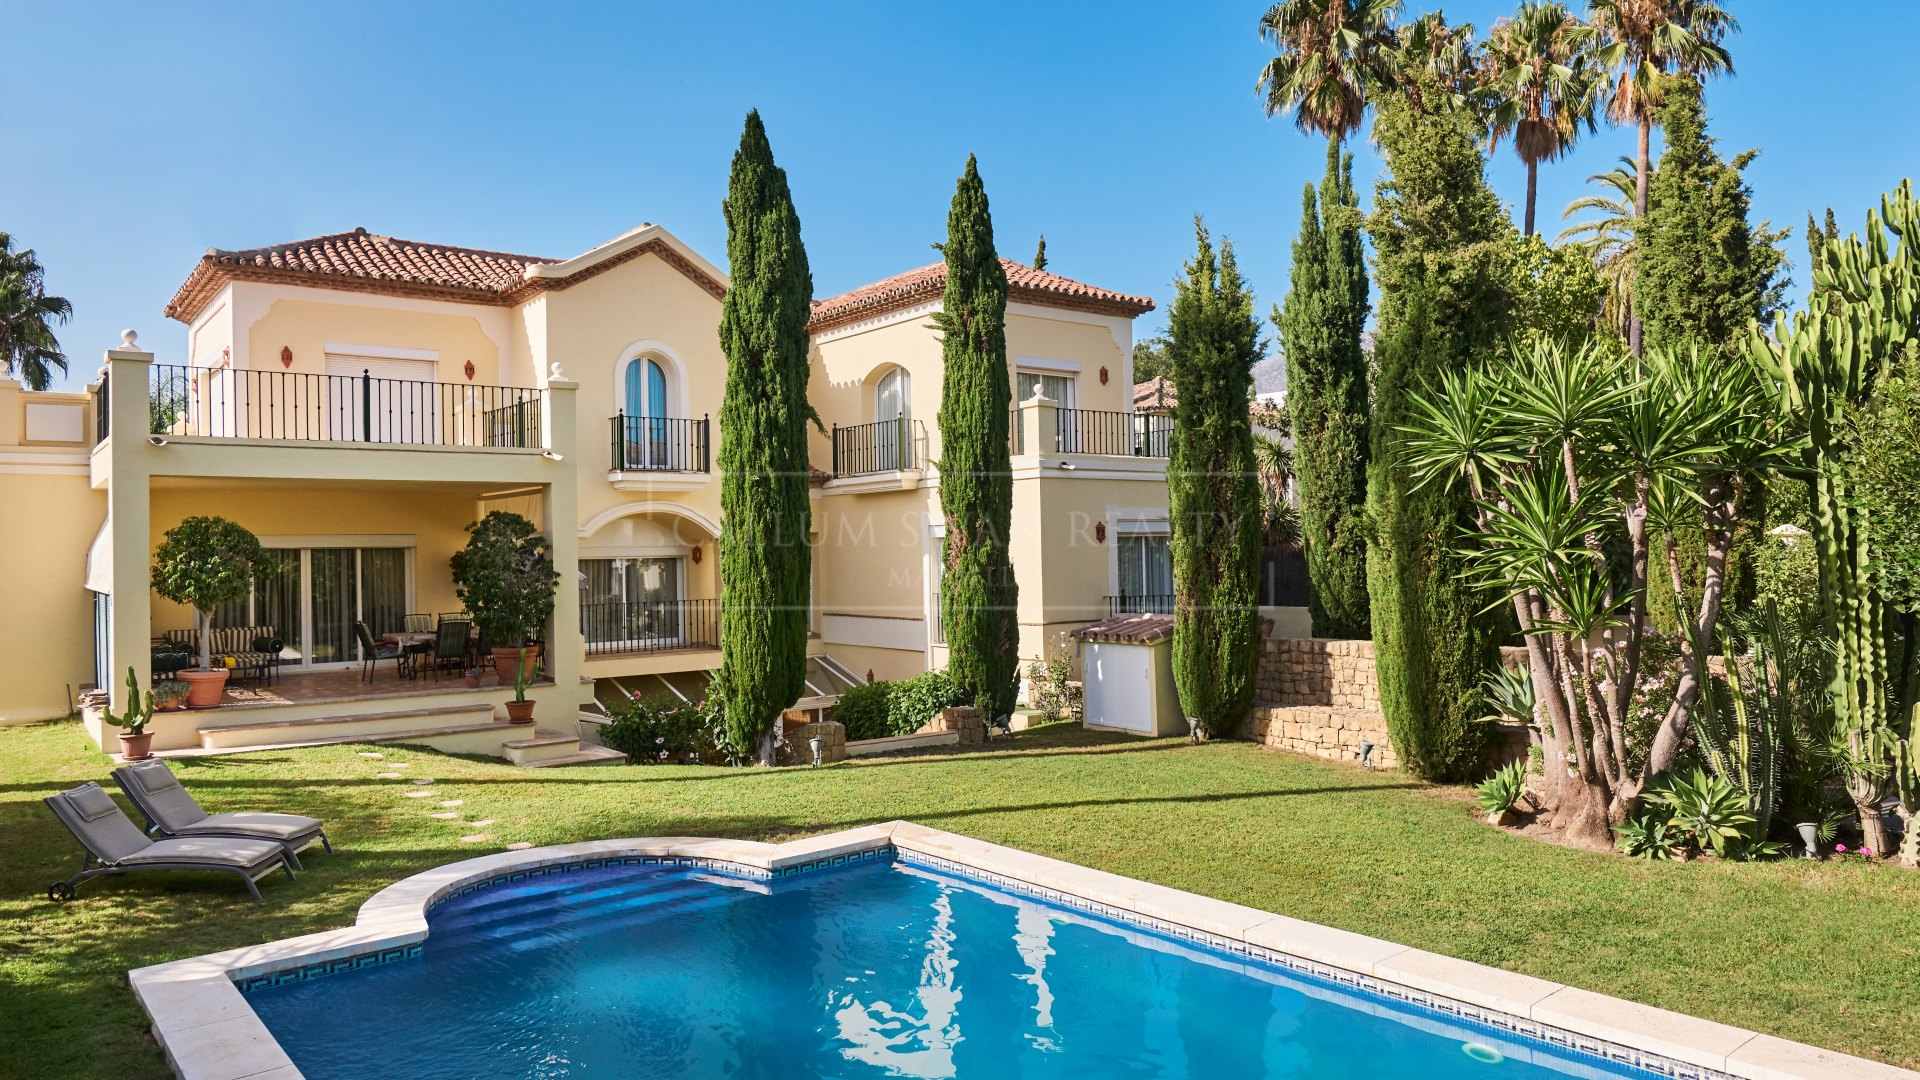 Elegant Villa in Las Brisas with Classic Andalusian Charm